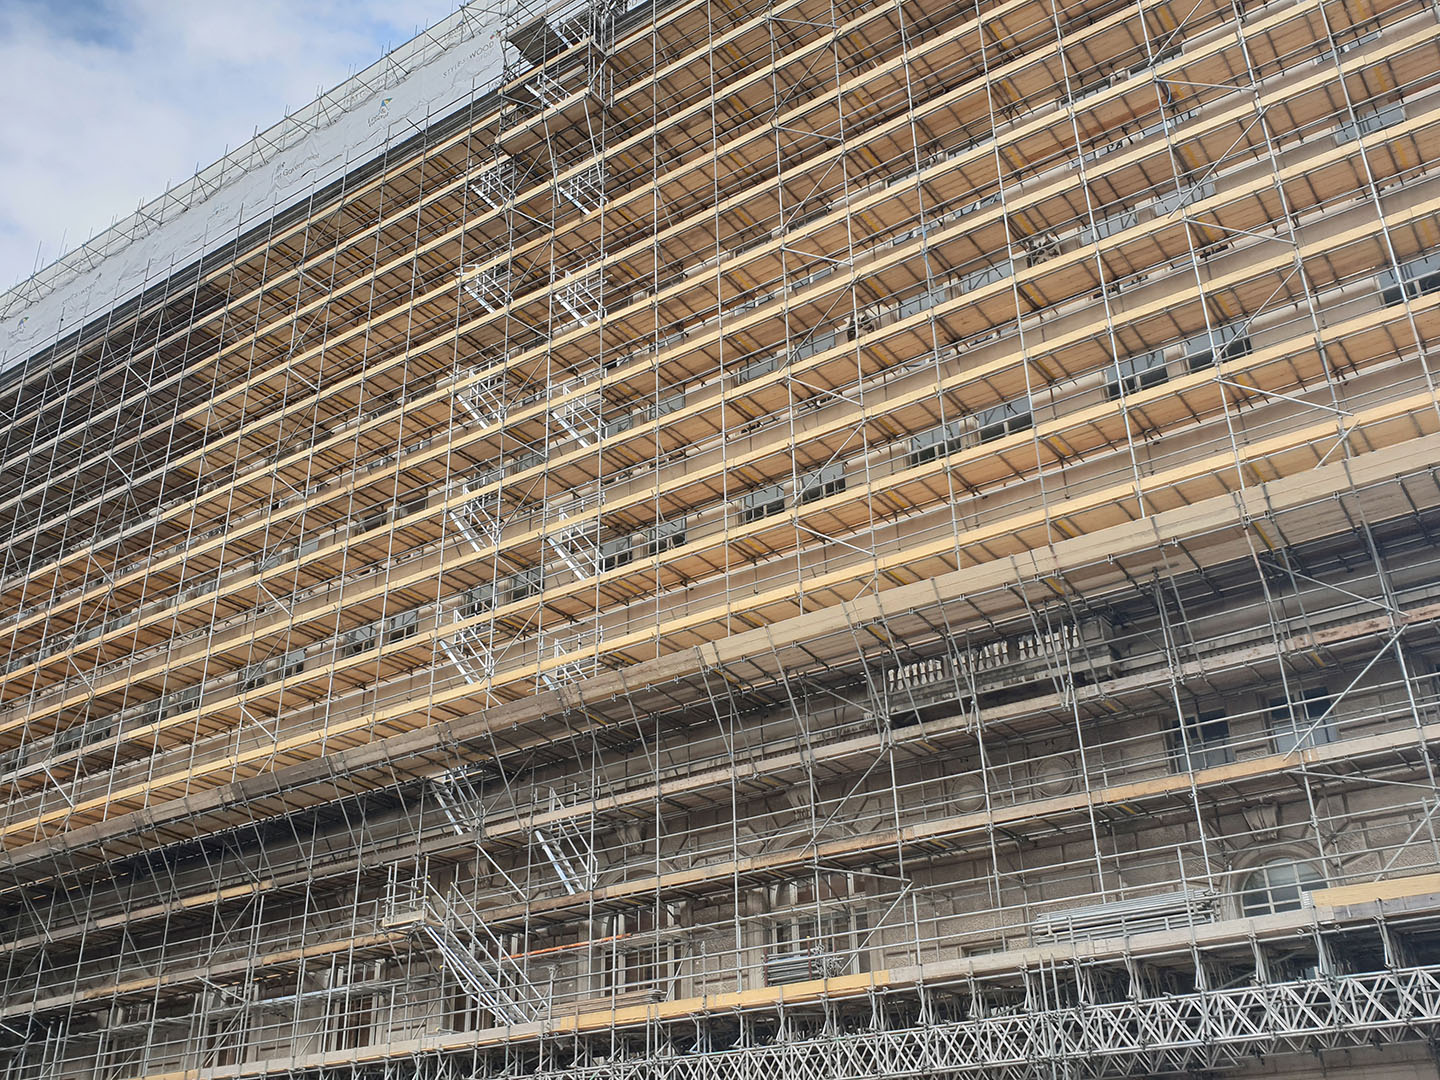 A photo showing several Alto Balustrade scaffold systems